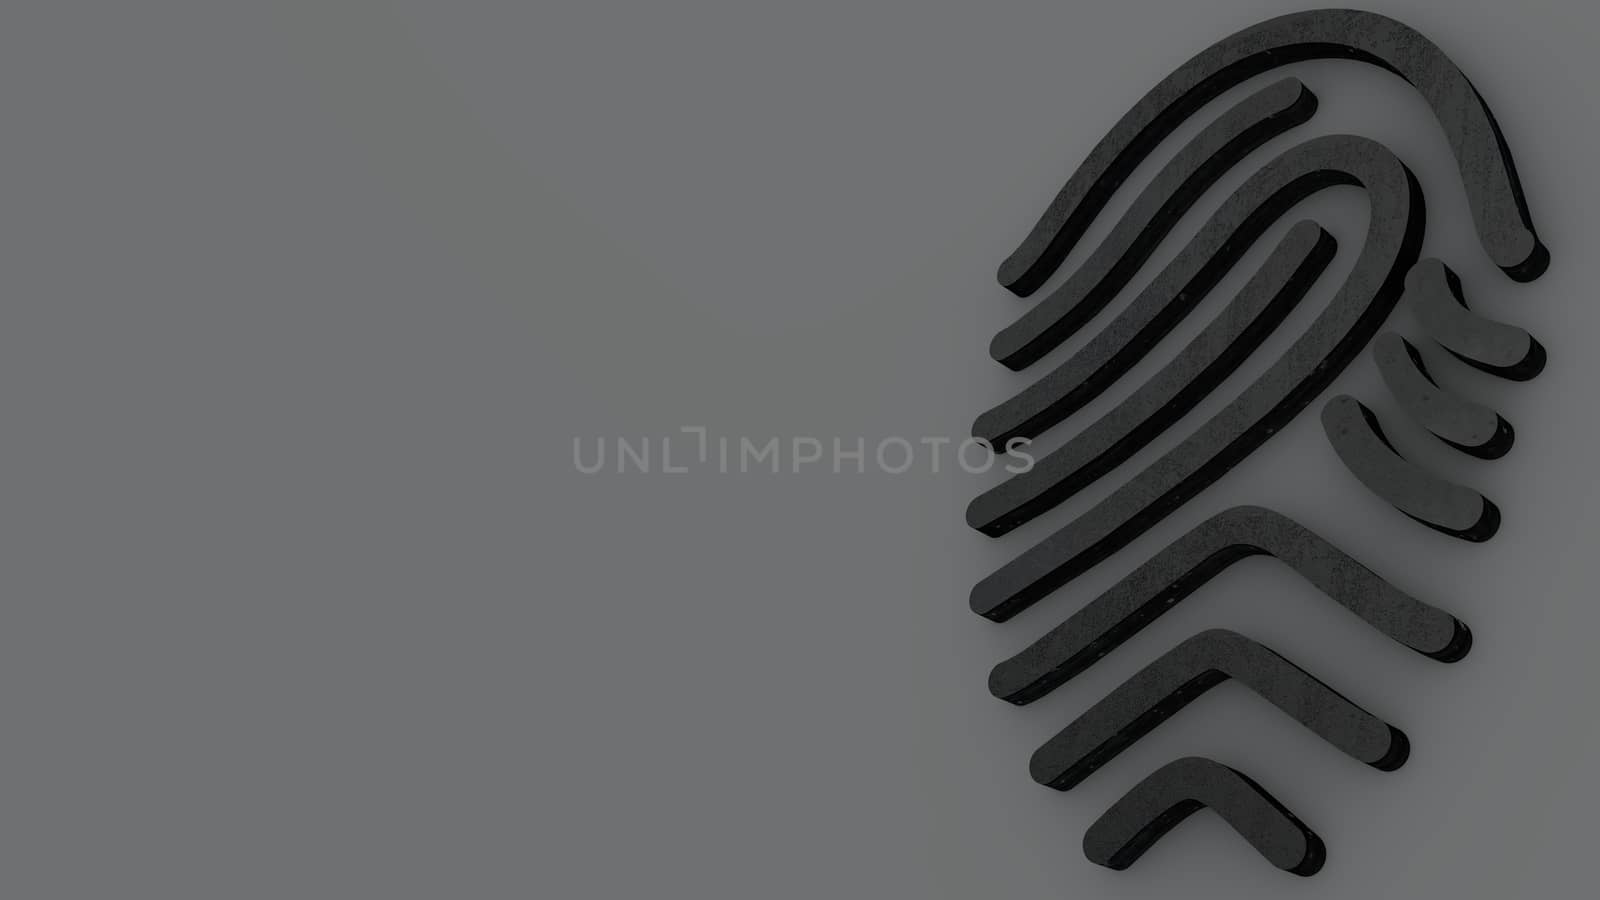 Abstract background with fingerprint. Digital backdrop. 3d rendering